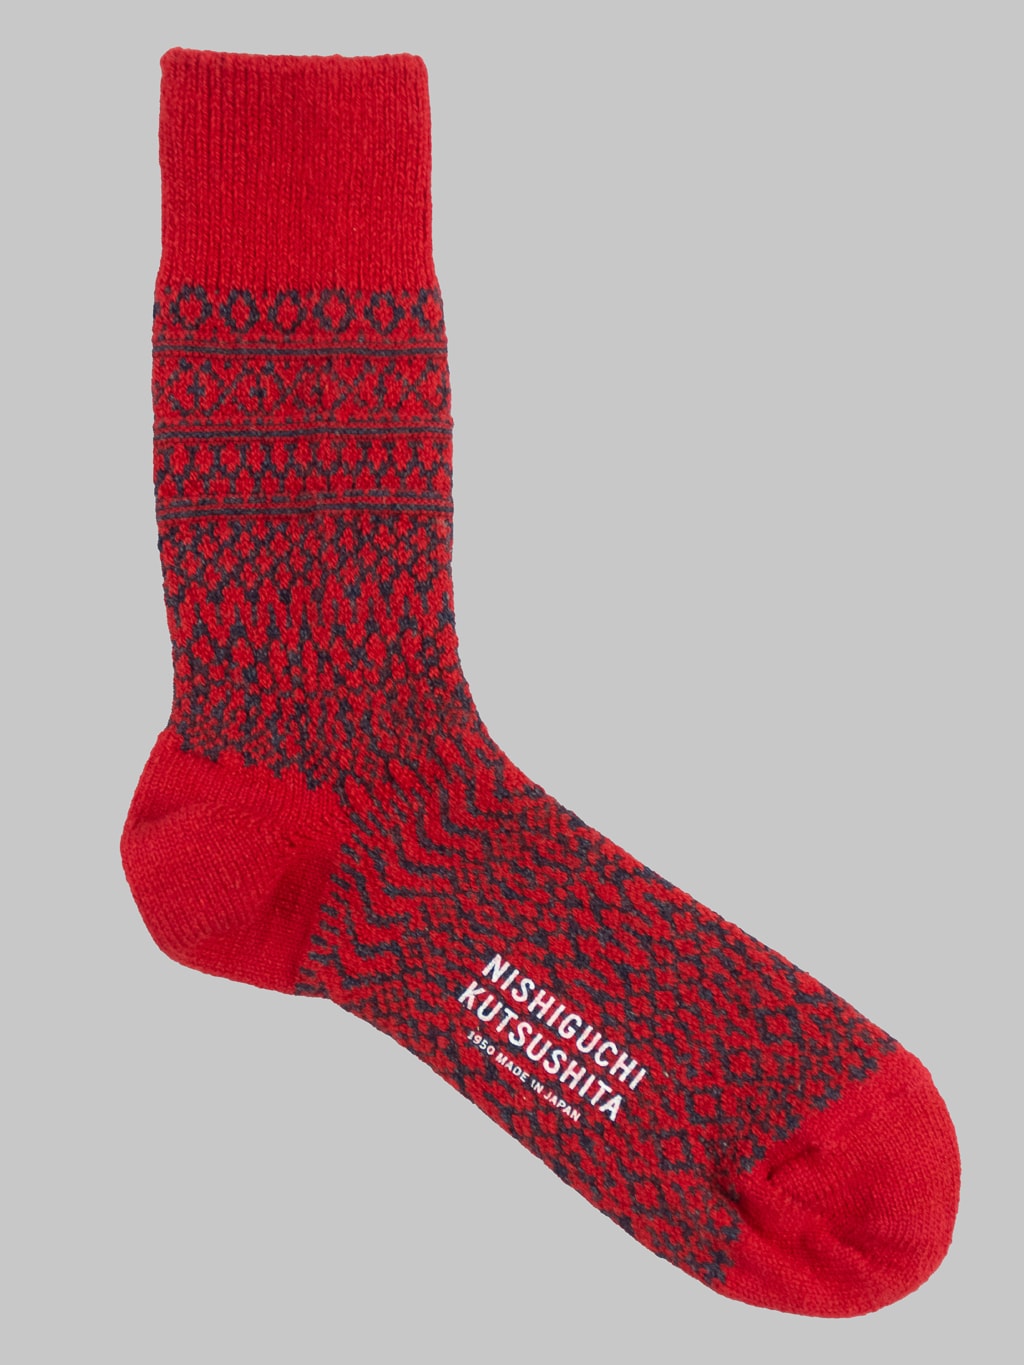 nishiguchi kutsushita oslo wool jacquard socks red made in japan